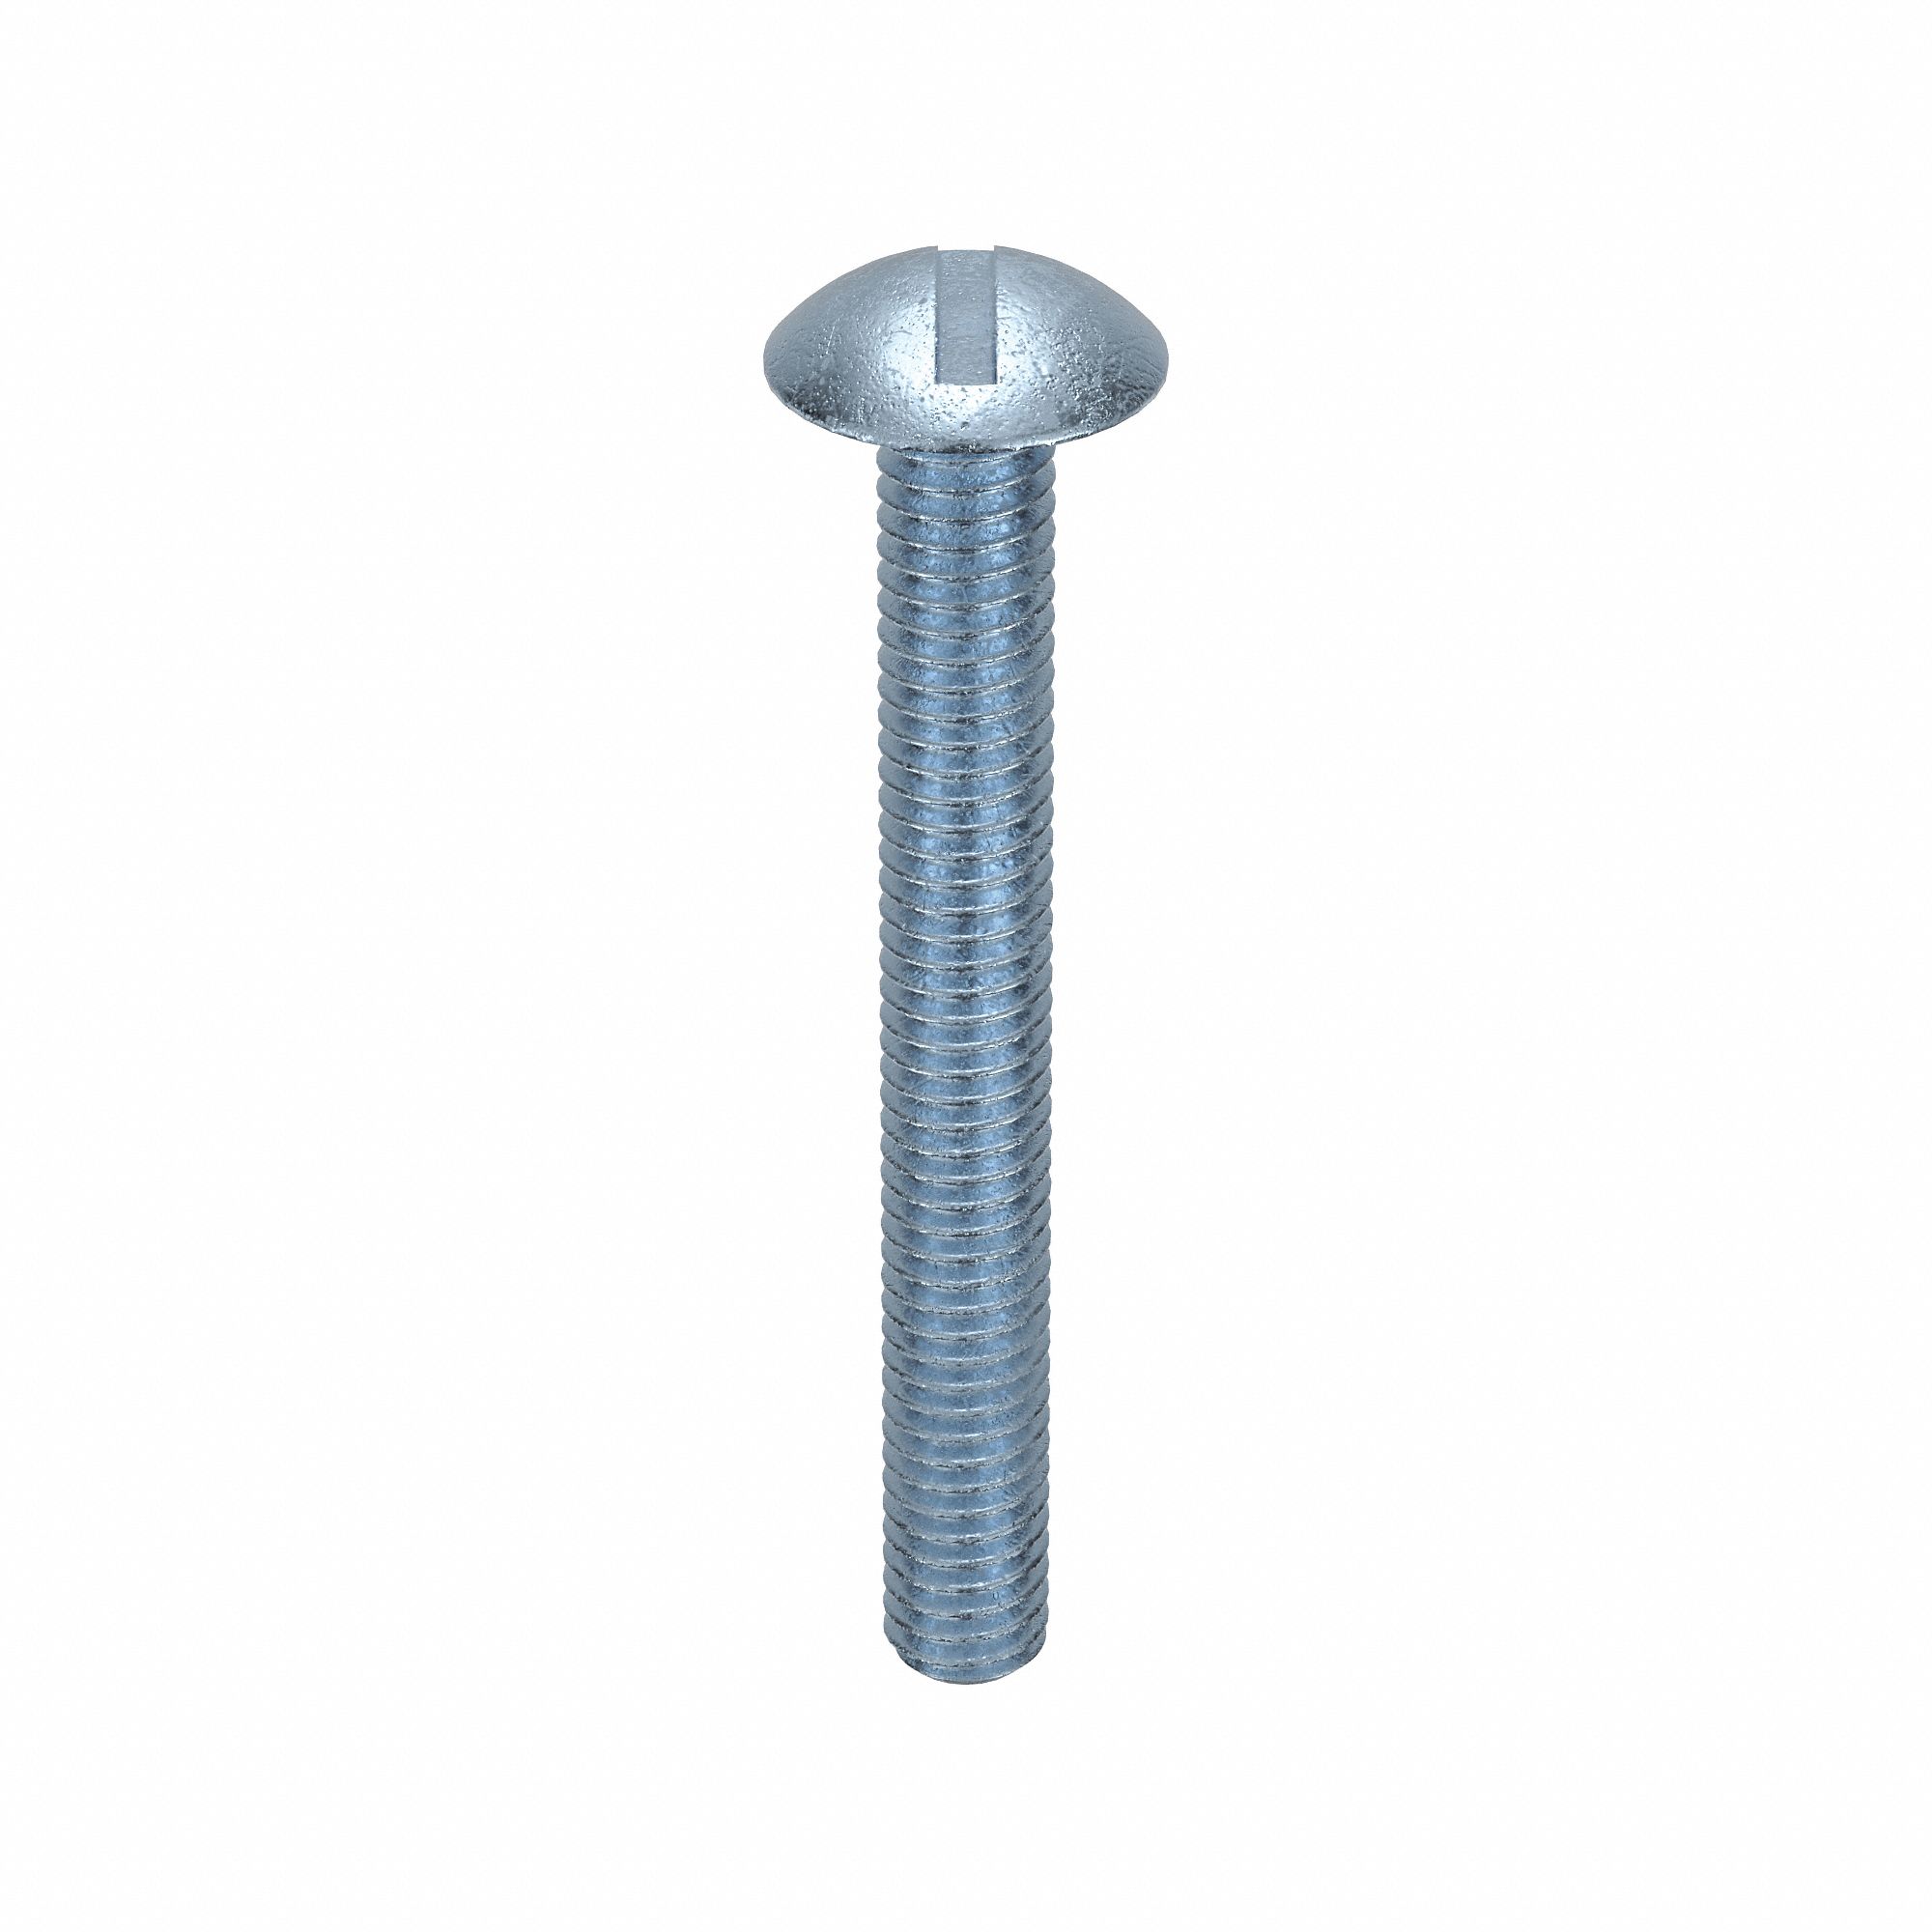 Machine Screw: 3/8-16 Thread Size, 3 in Lg, Steel, Zinc Plated, Truss,  Slotted, Inch, Round, 100 PK